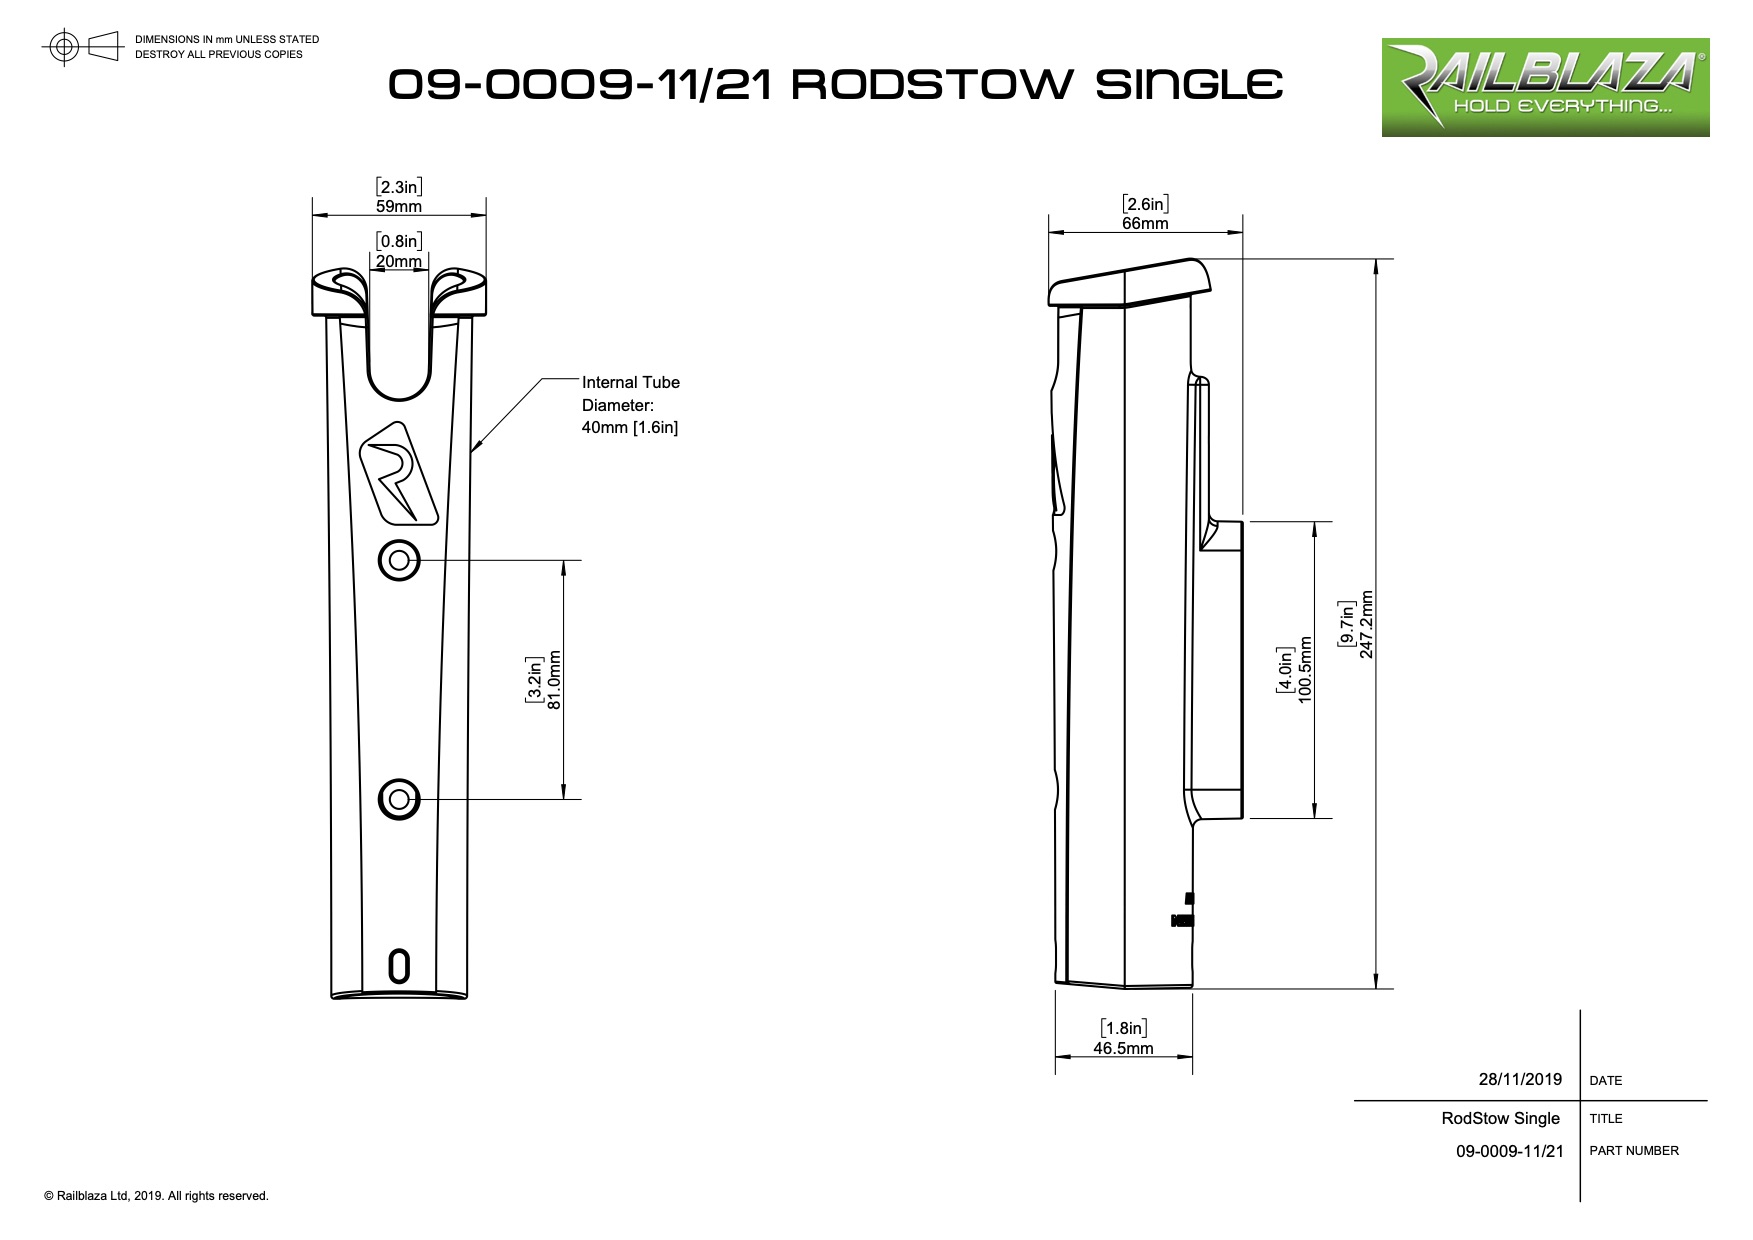 RodStow-Single-RAILBLAZA-RodStow-Single-Dimensions-2254_205854.jpg